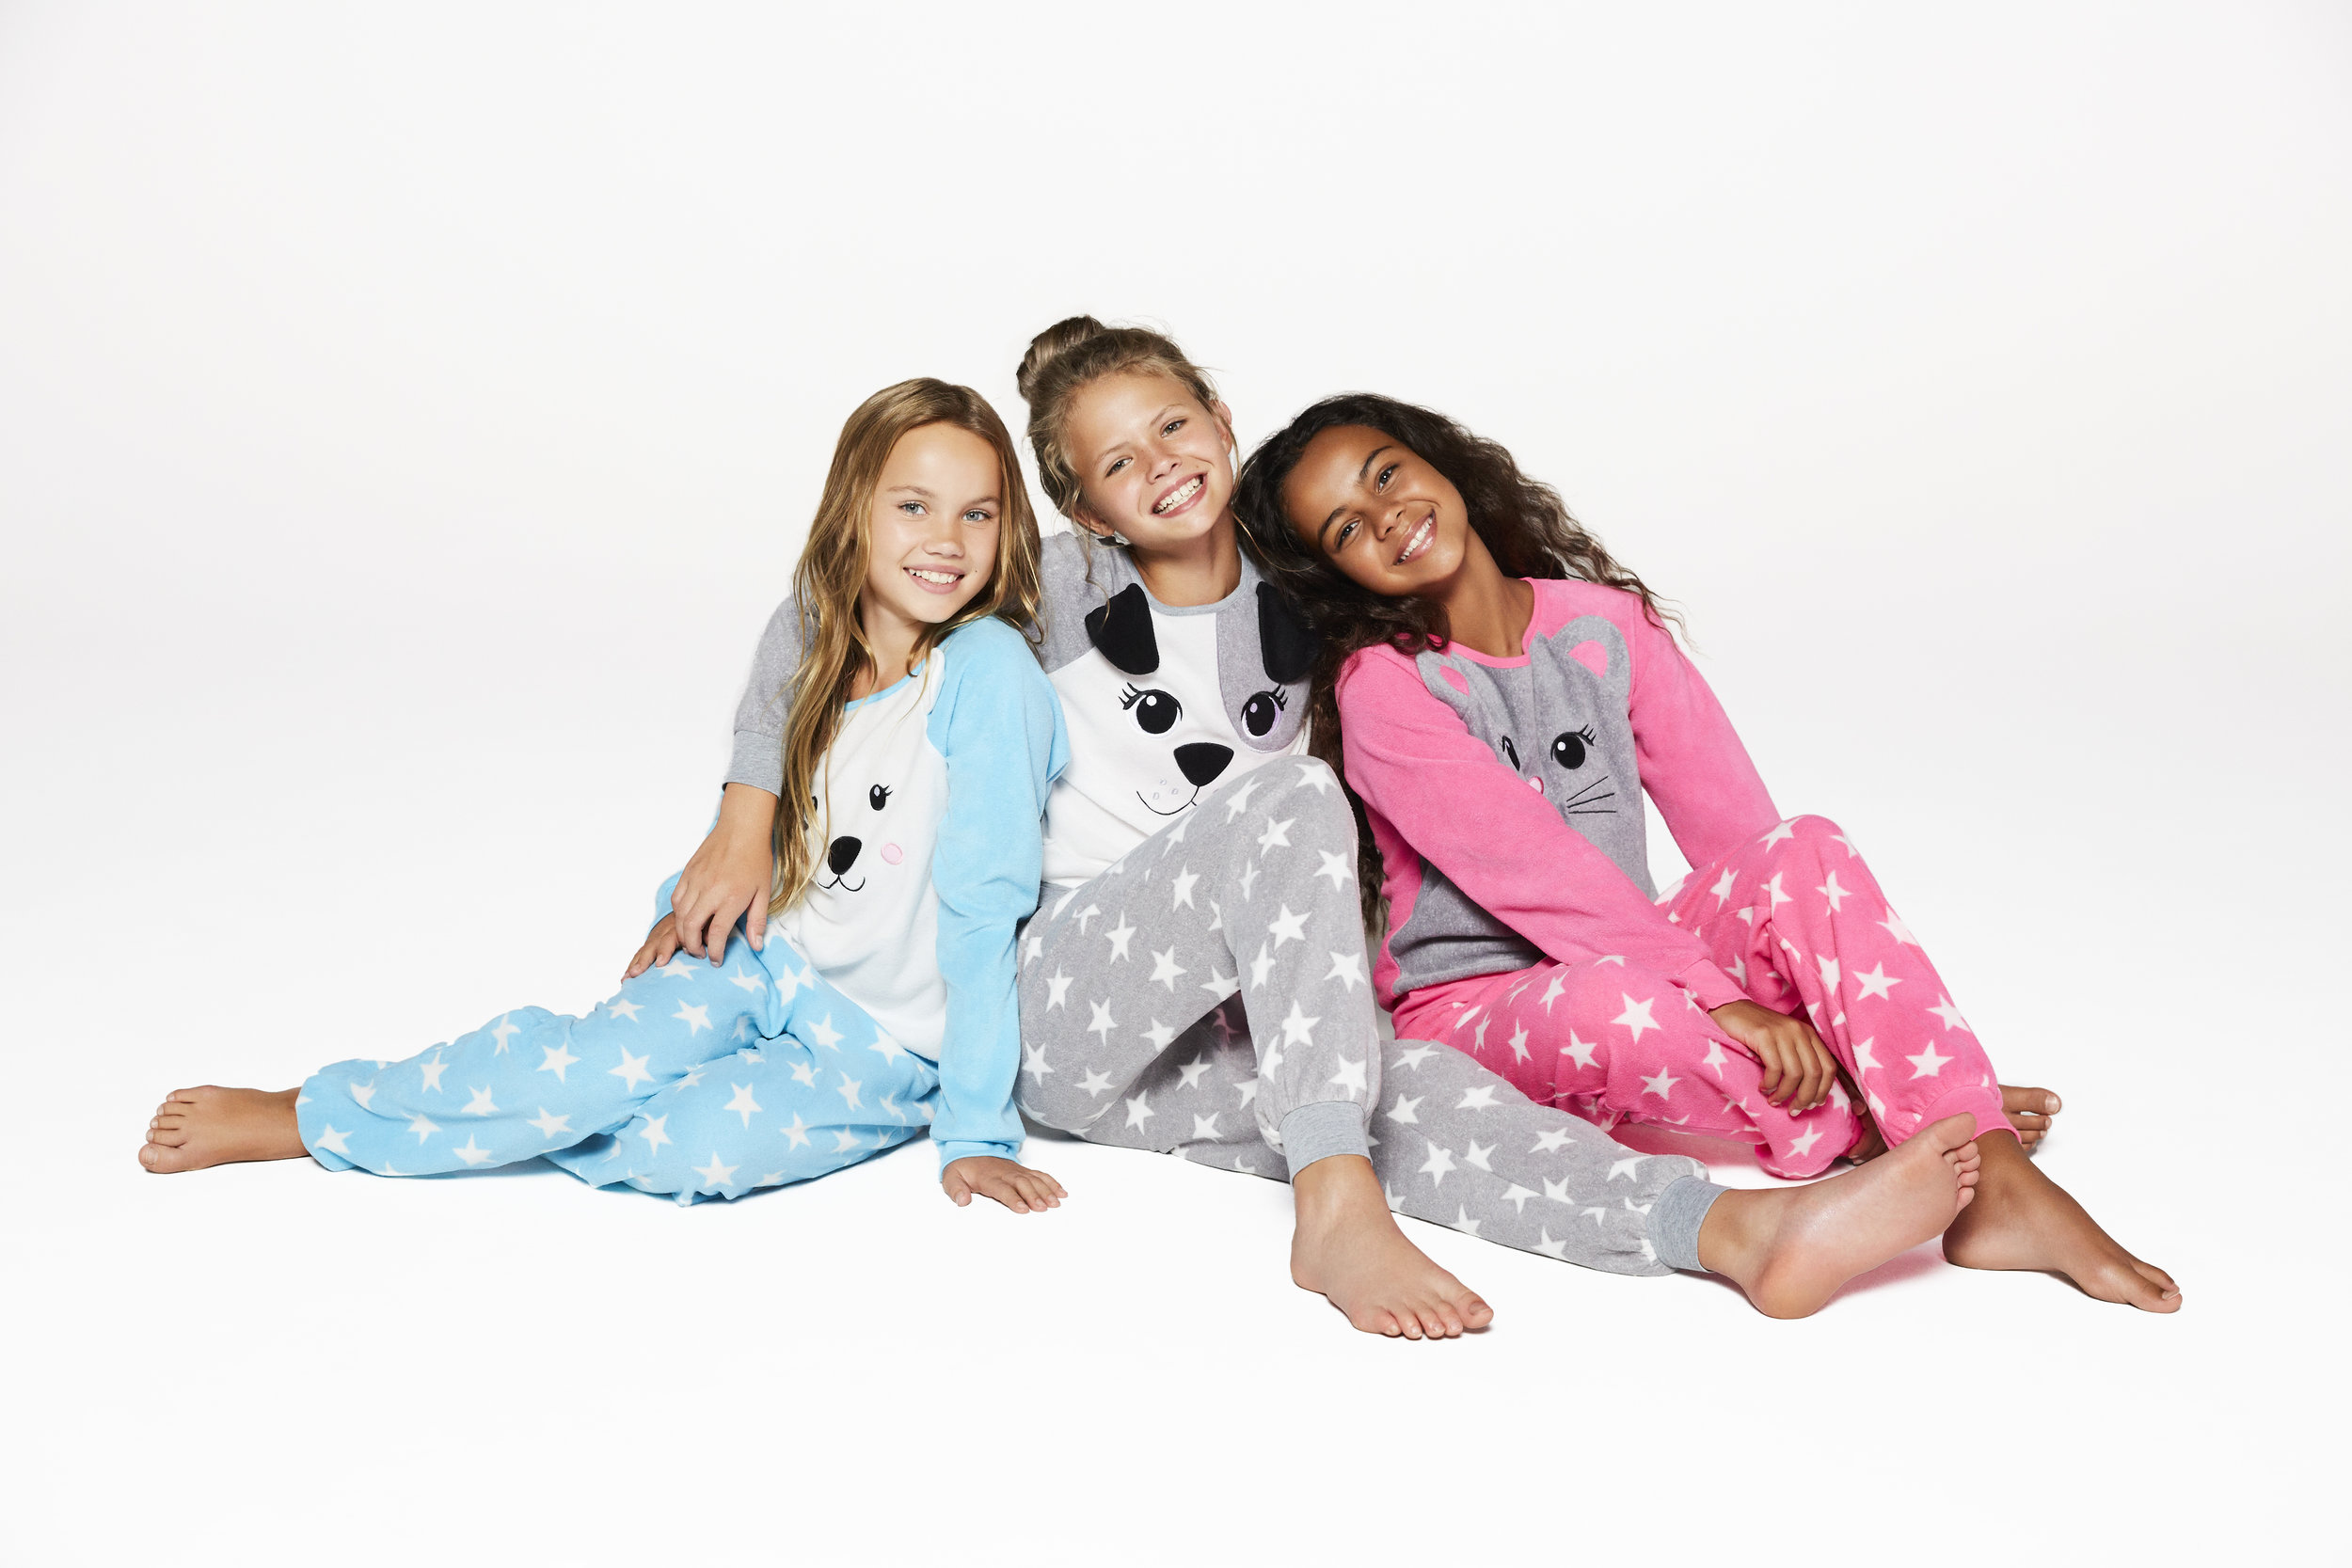 Jellifish Kids Child Girls 2-Piece Pajama Set Kids Sleepwear